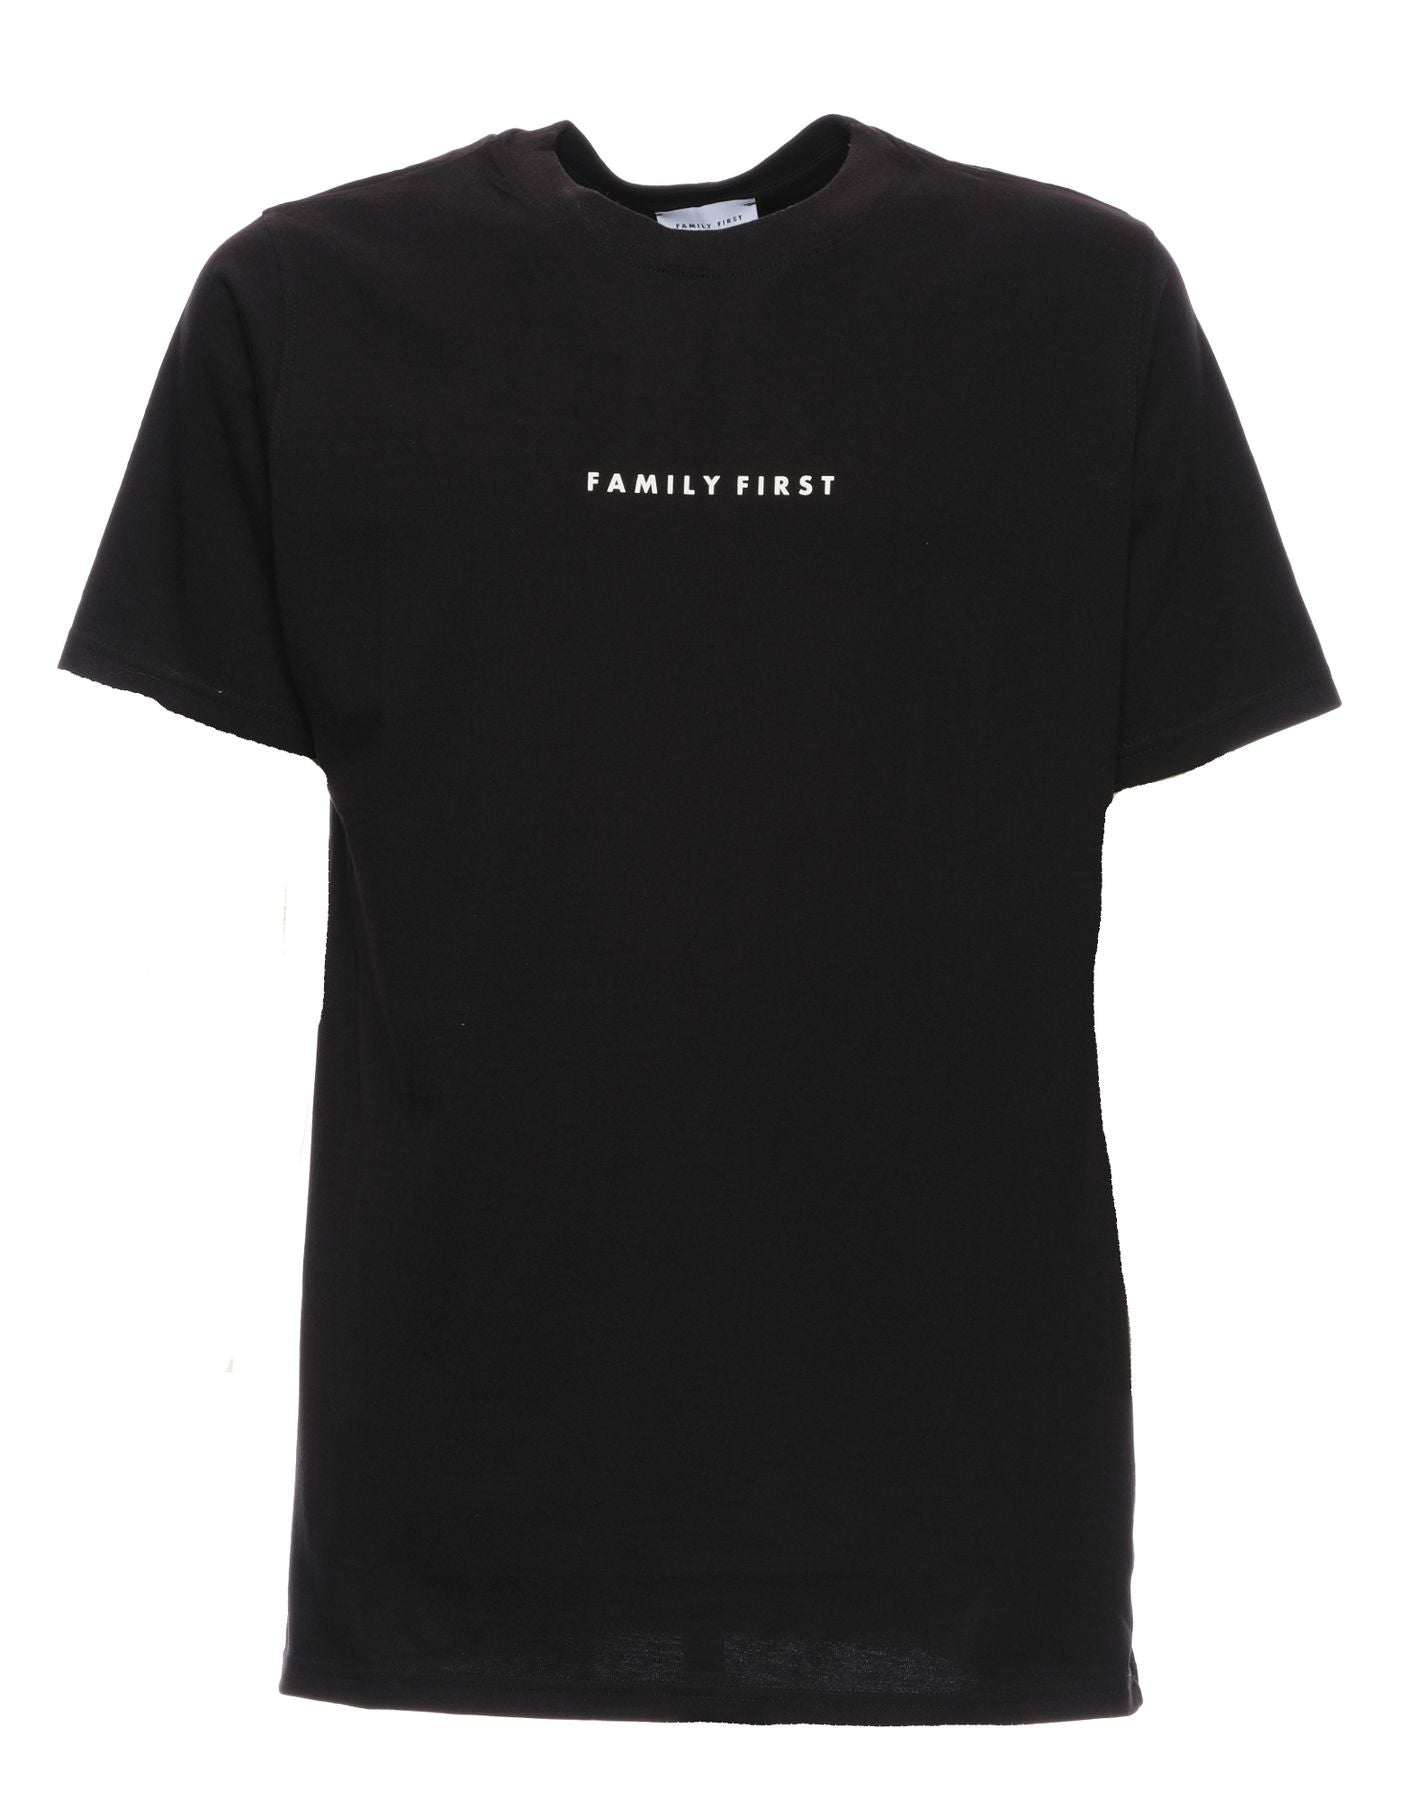 Camiseta para el hombre logotipo negro Family First